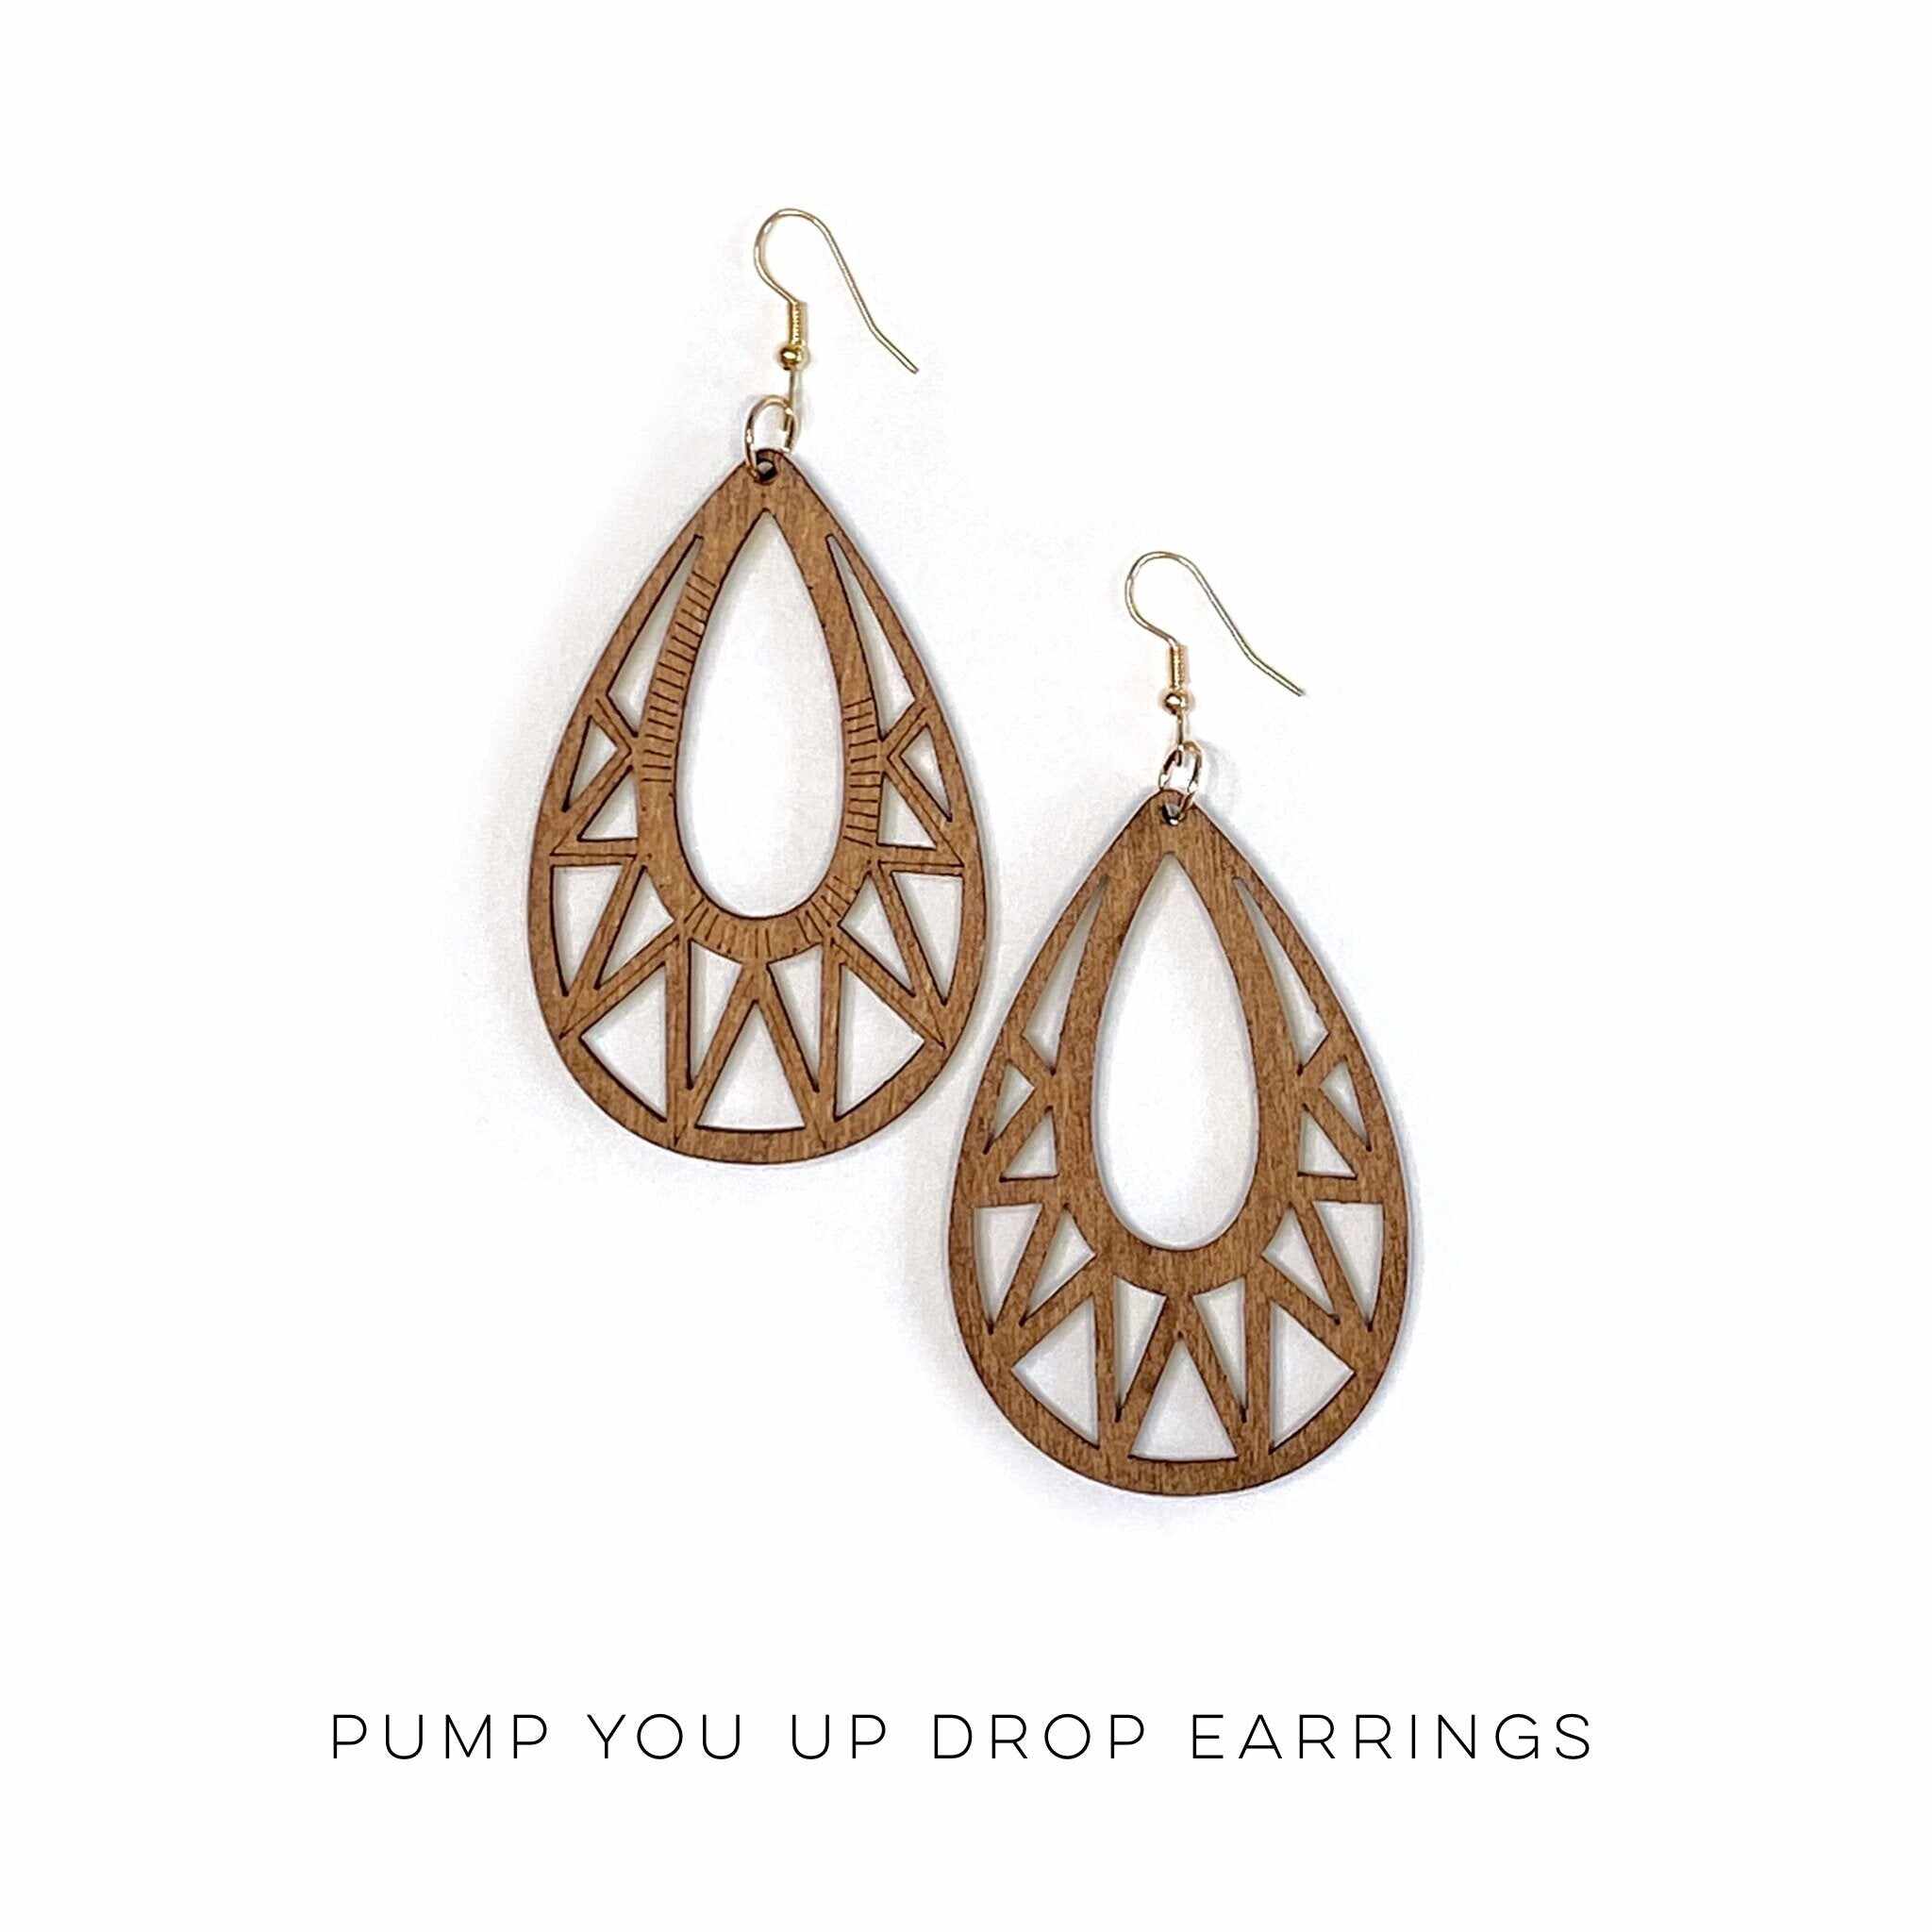 Pump You Up Drop Earrings